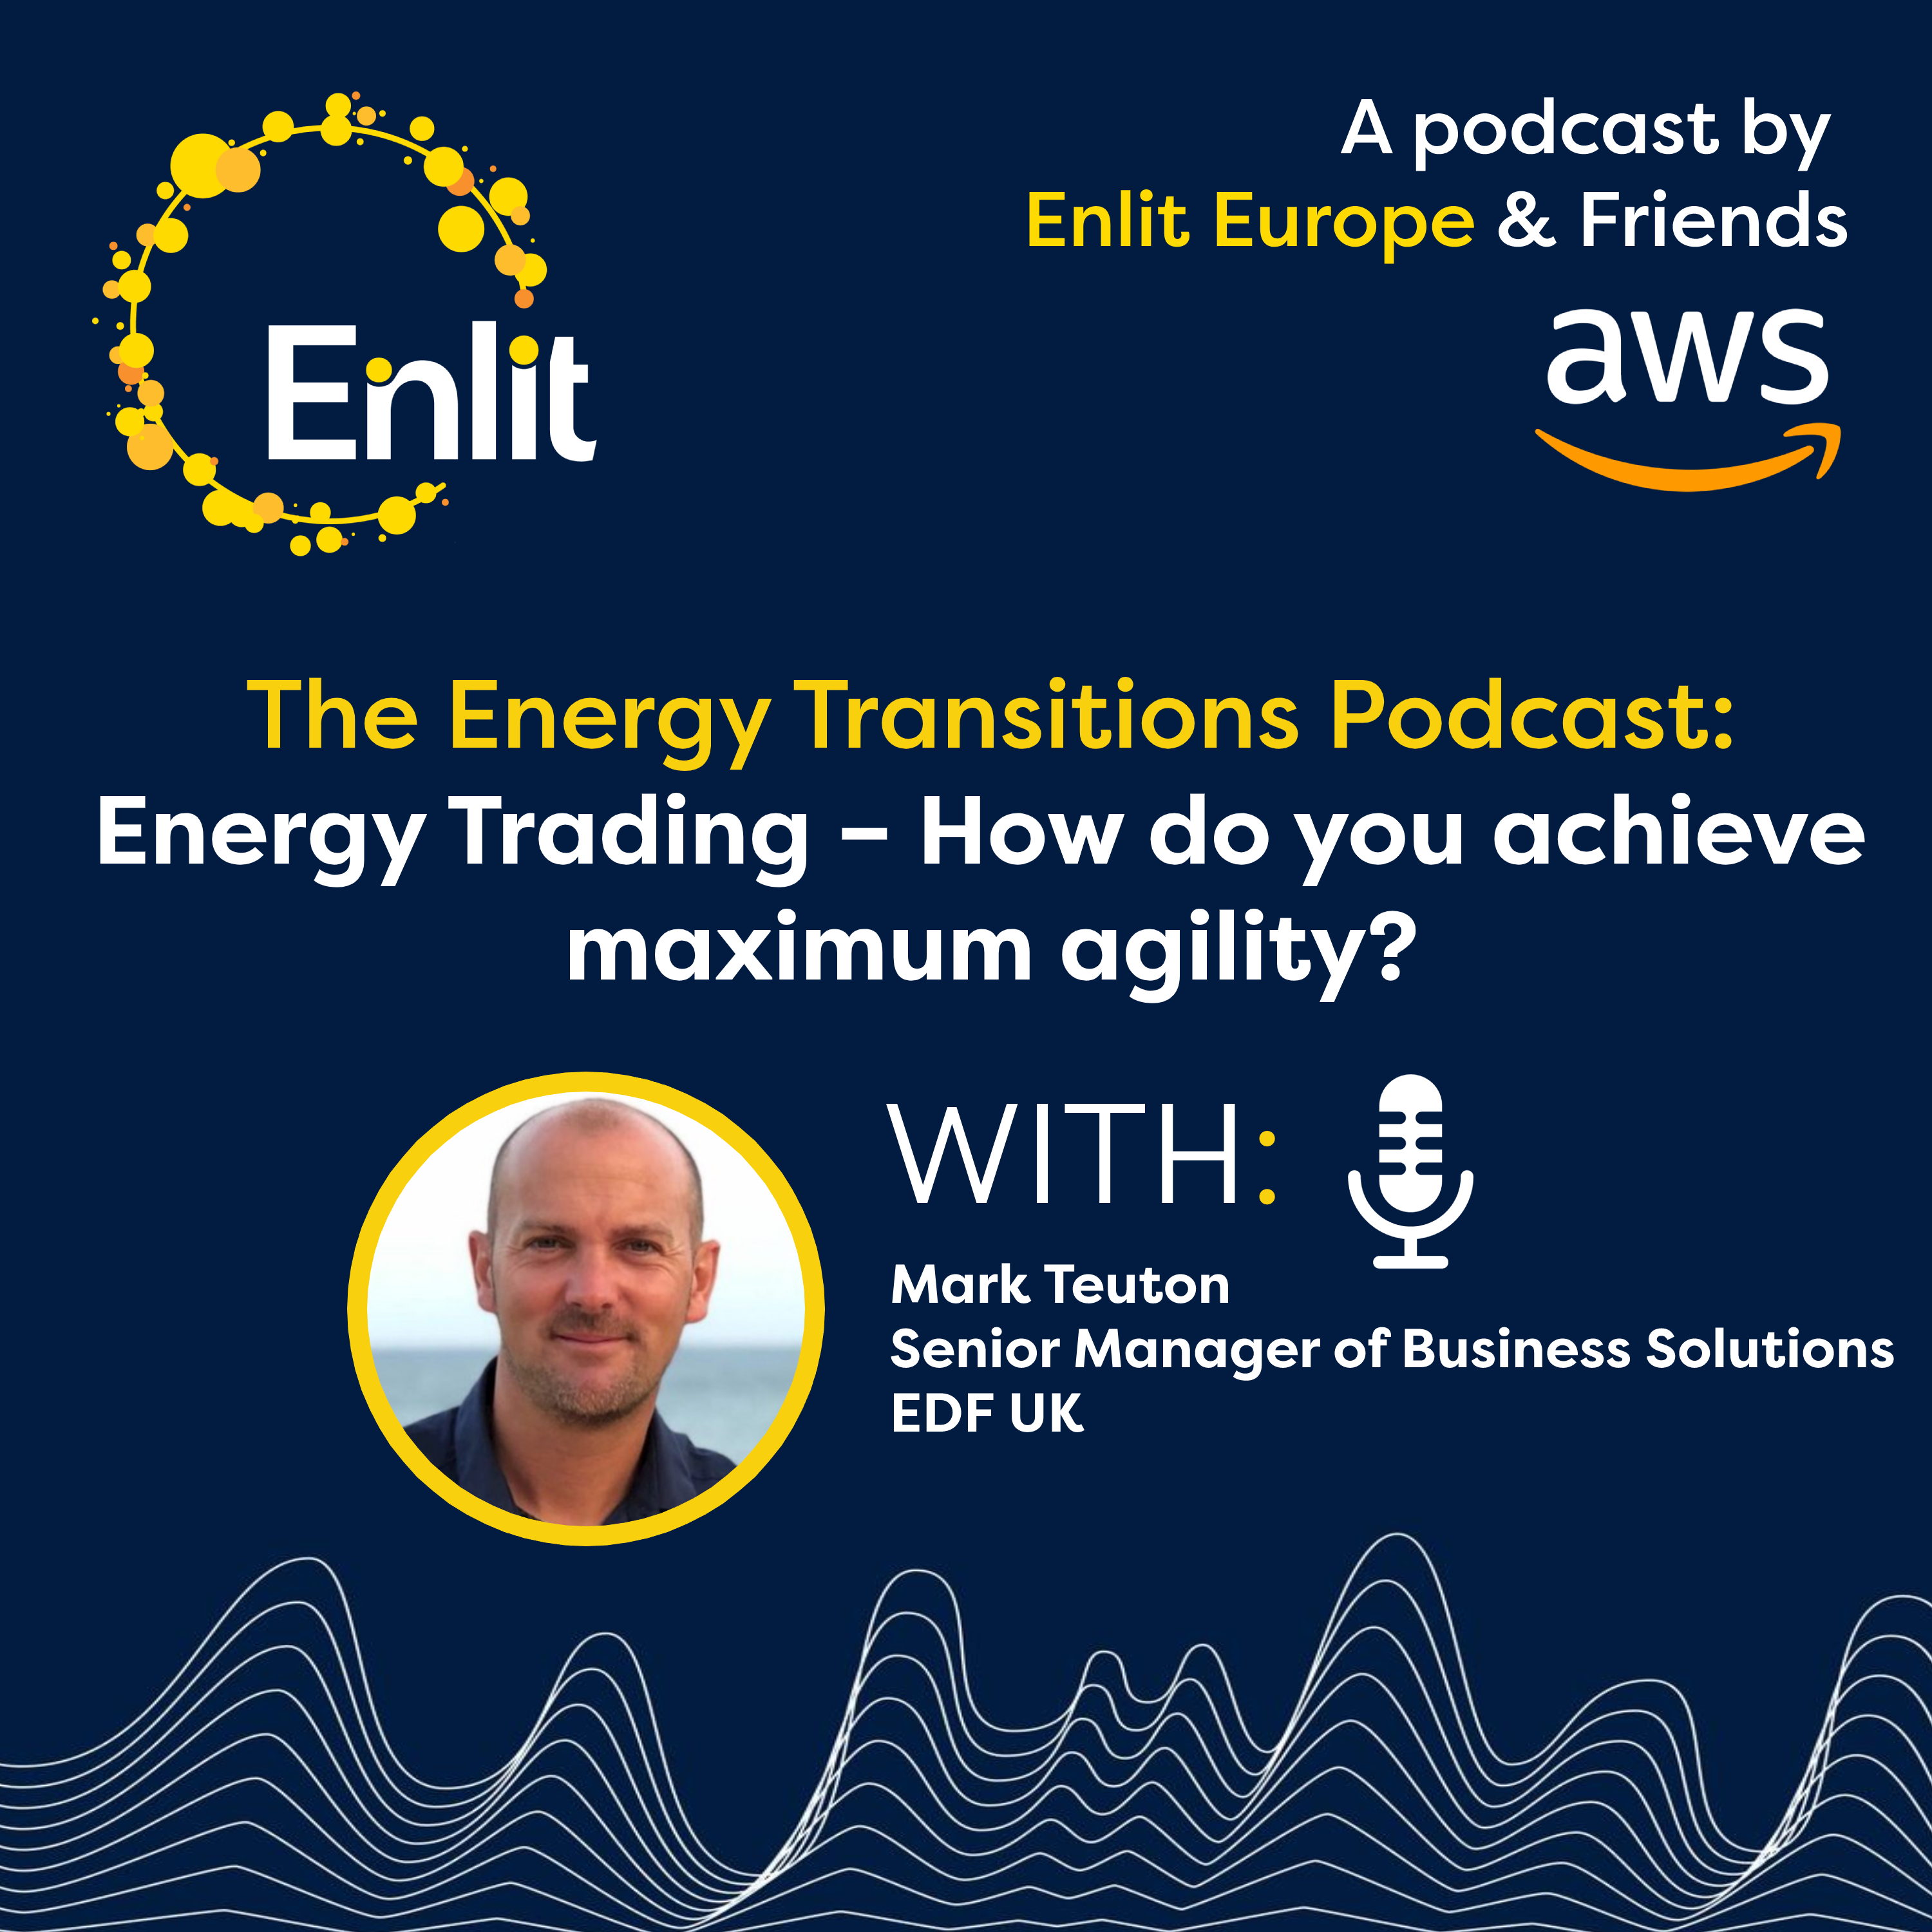 Energy Trading – How do you achieve maximum agility?